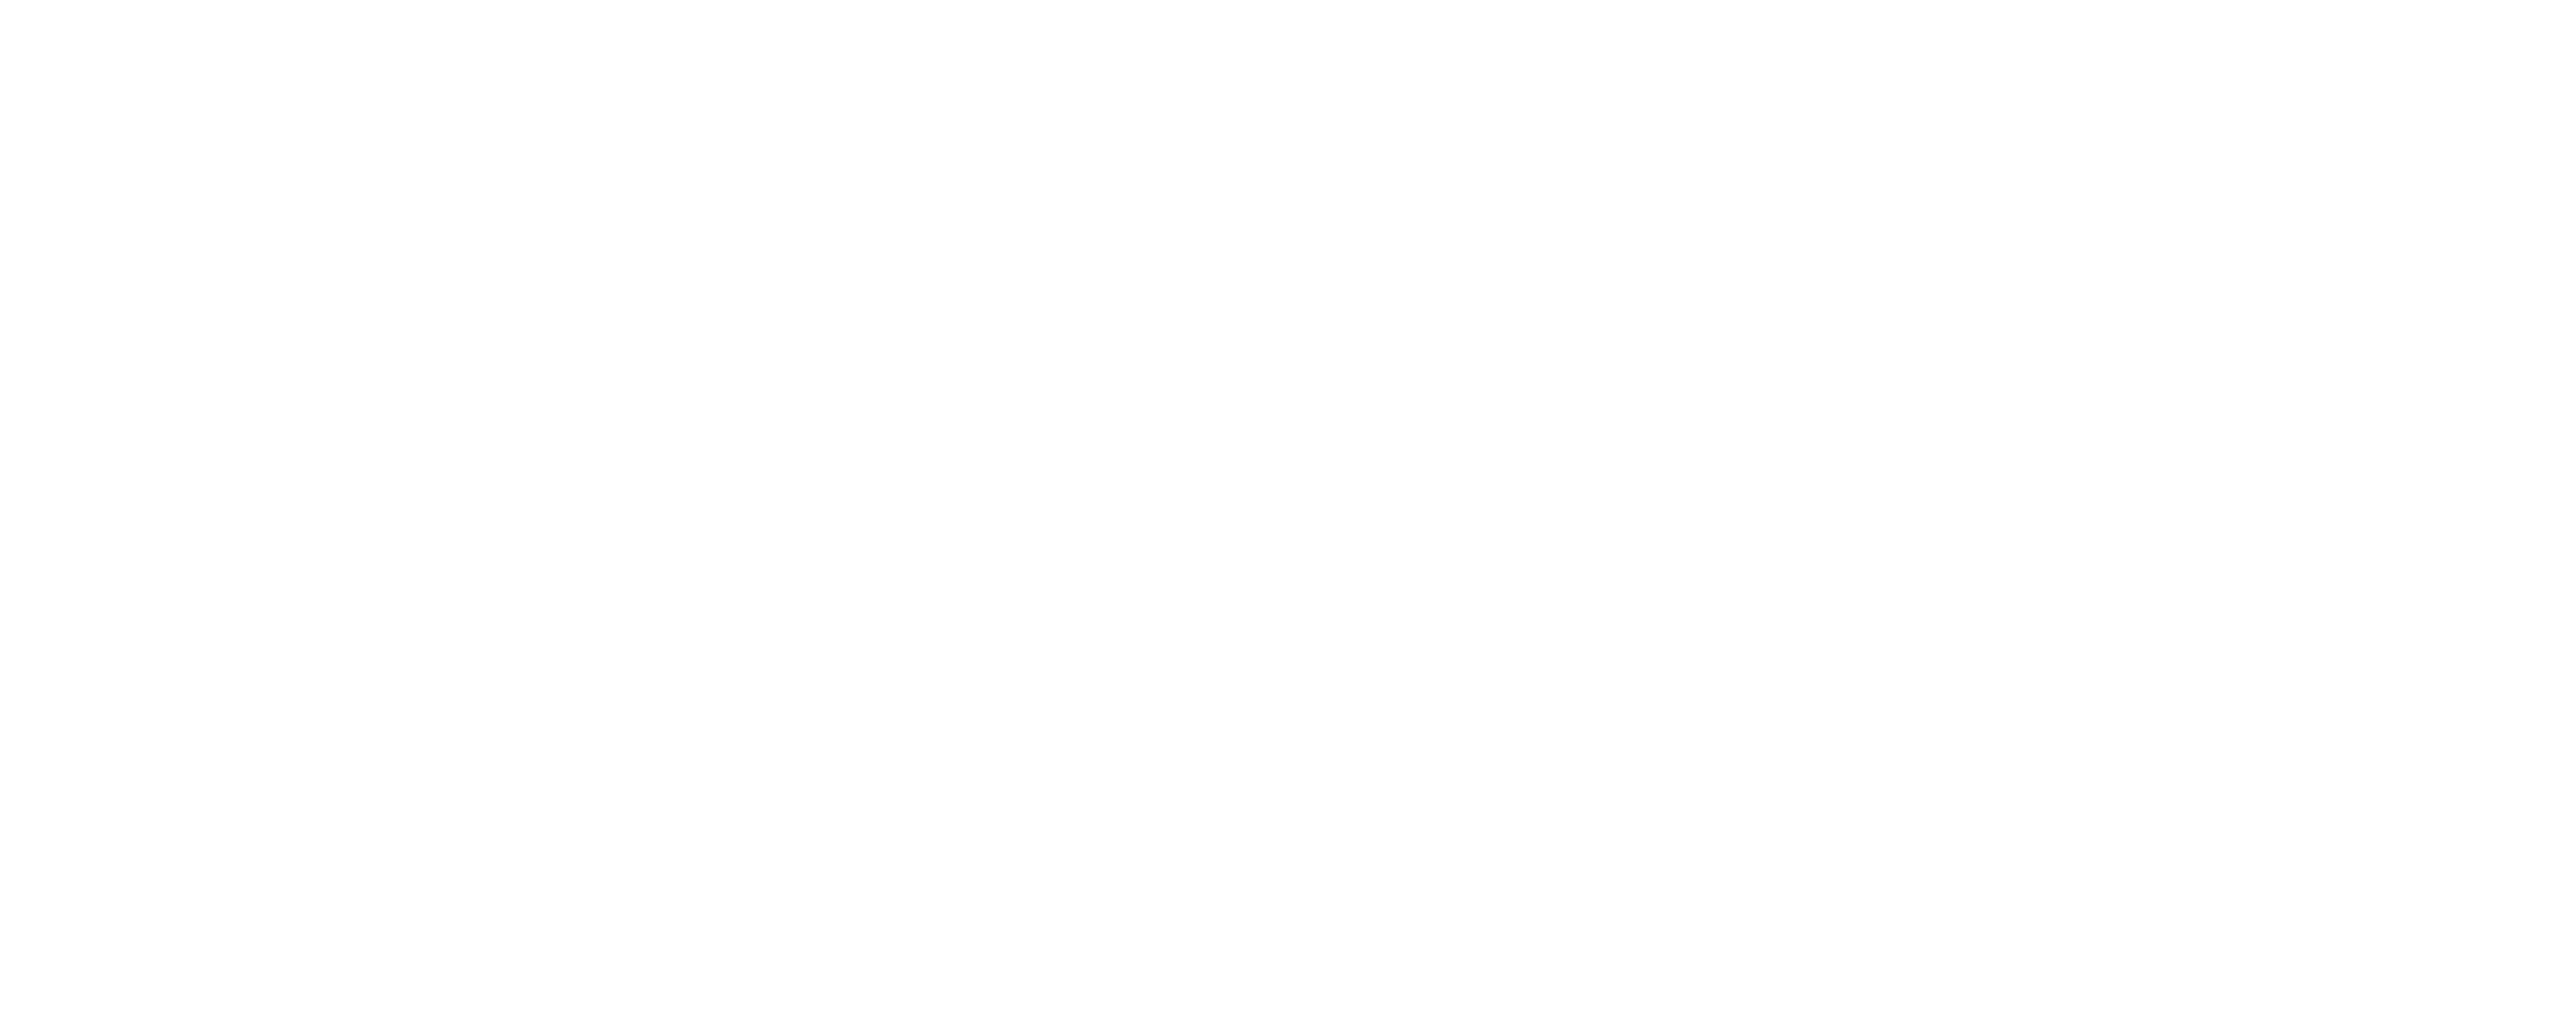 Leader invest logo- לוגו עם רקע לבן